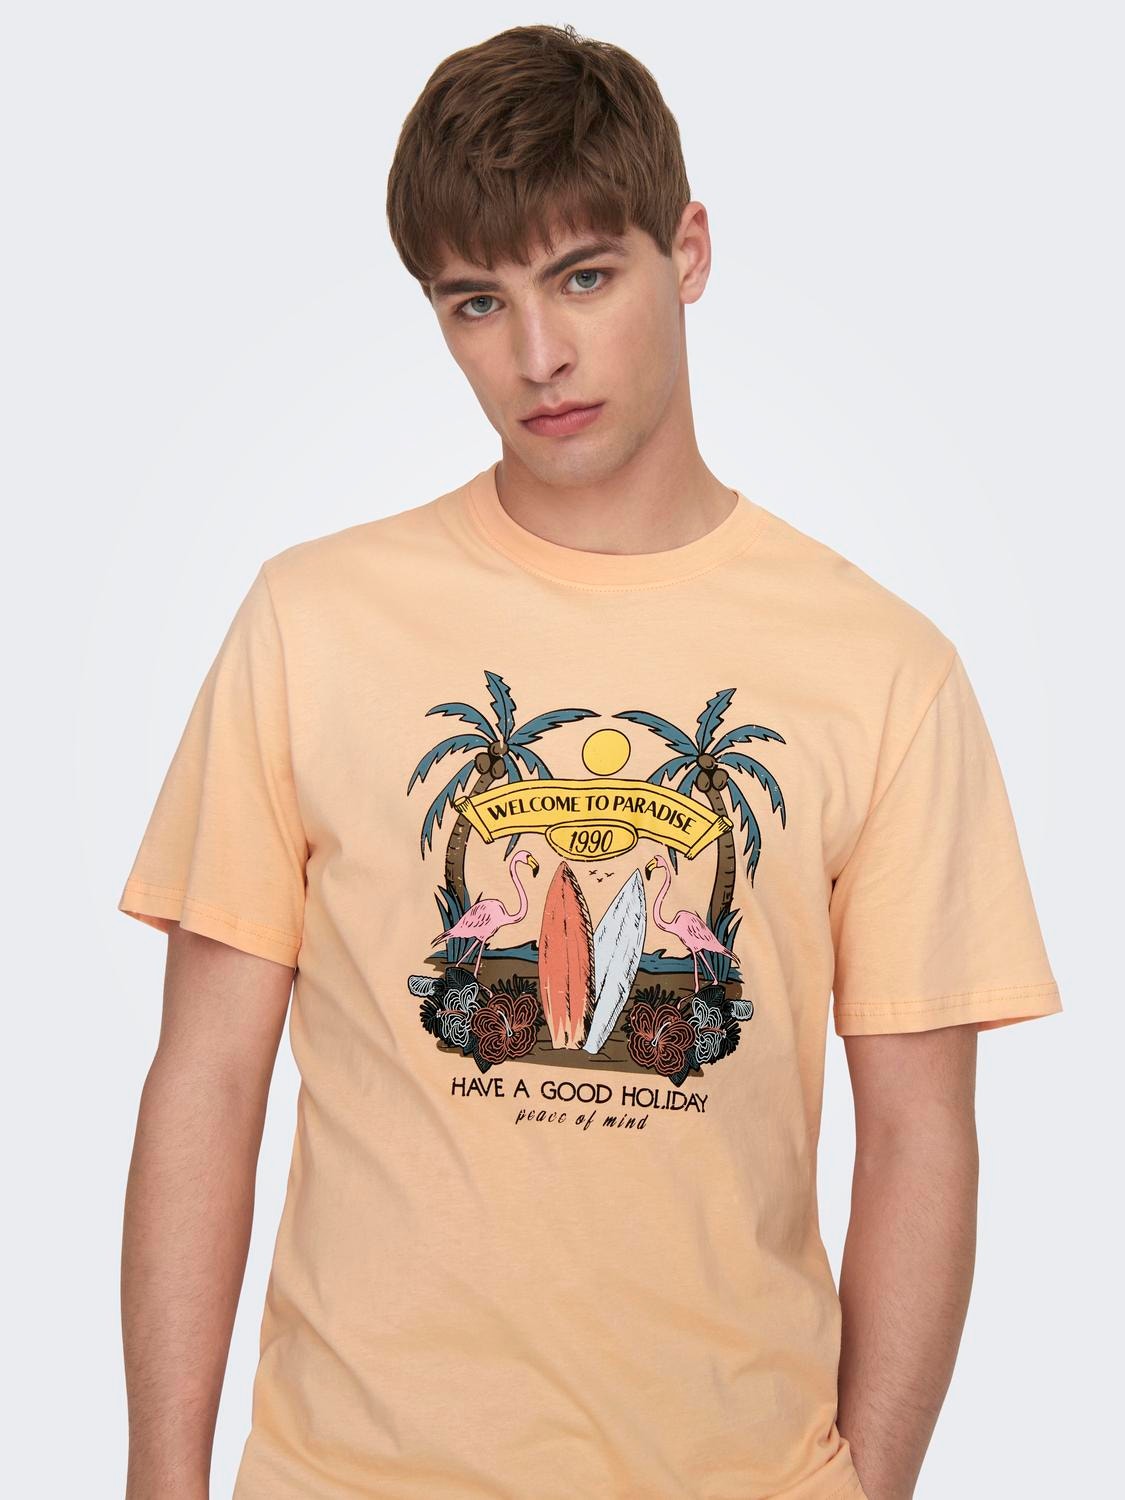 ONLY & SONS Camisetas Corte regular Cuello redondo -Peach Nectar - 22026084